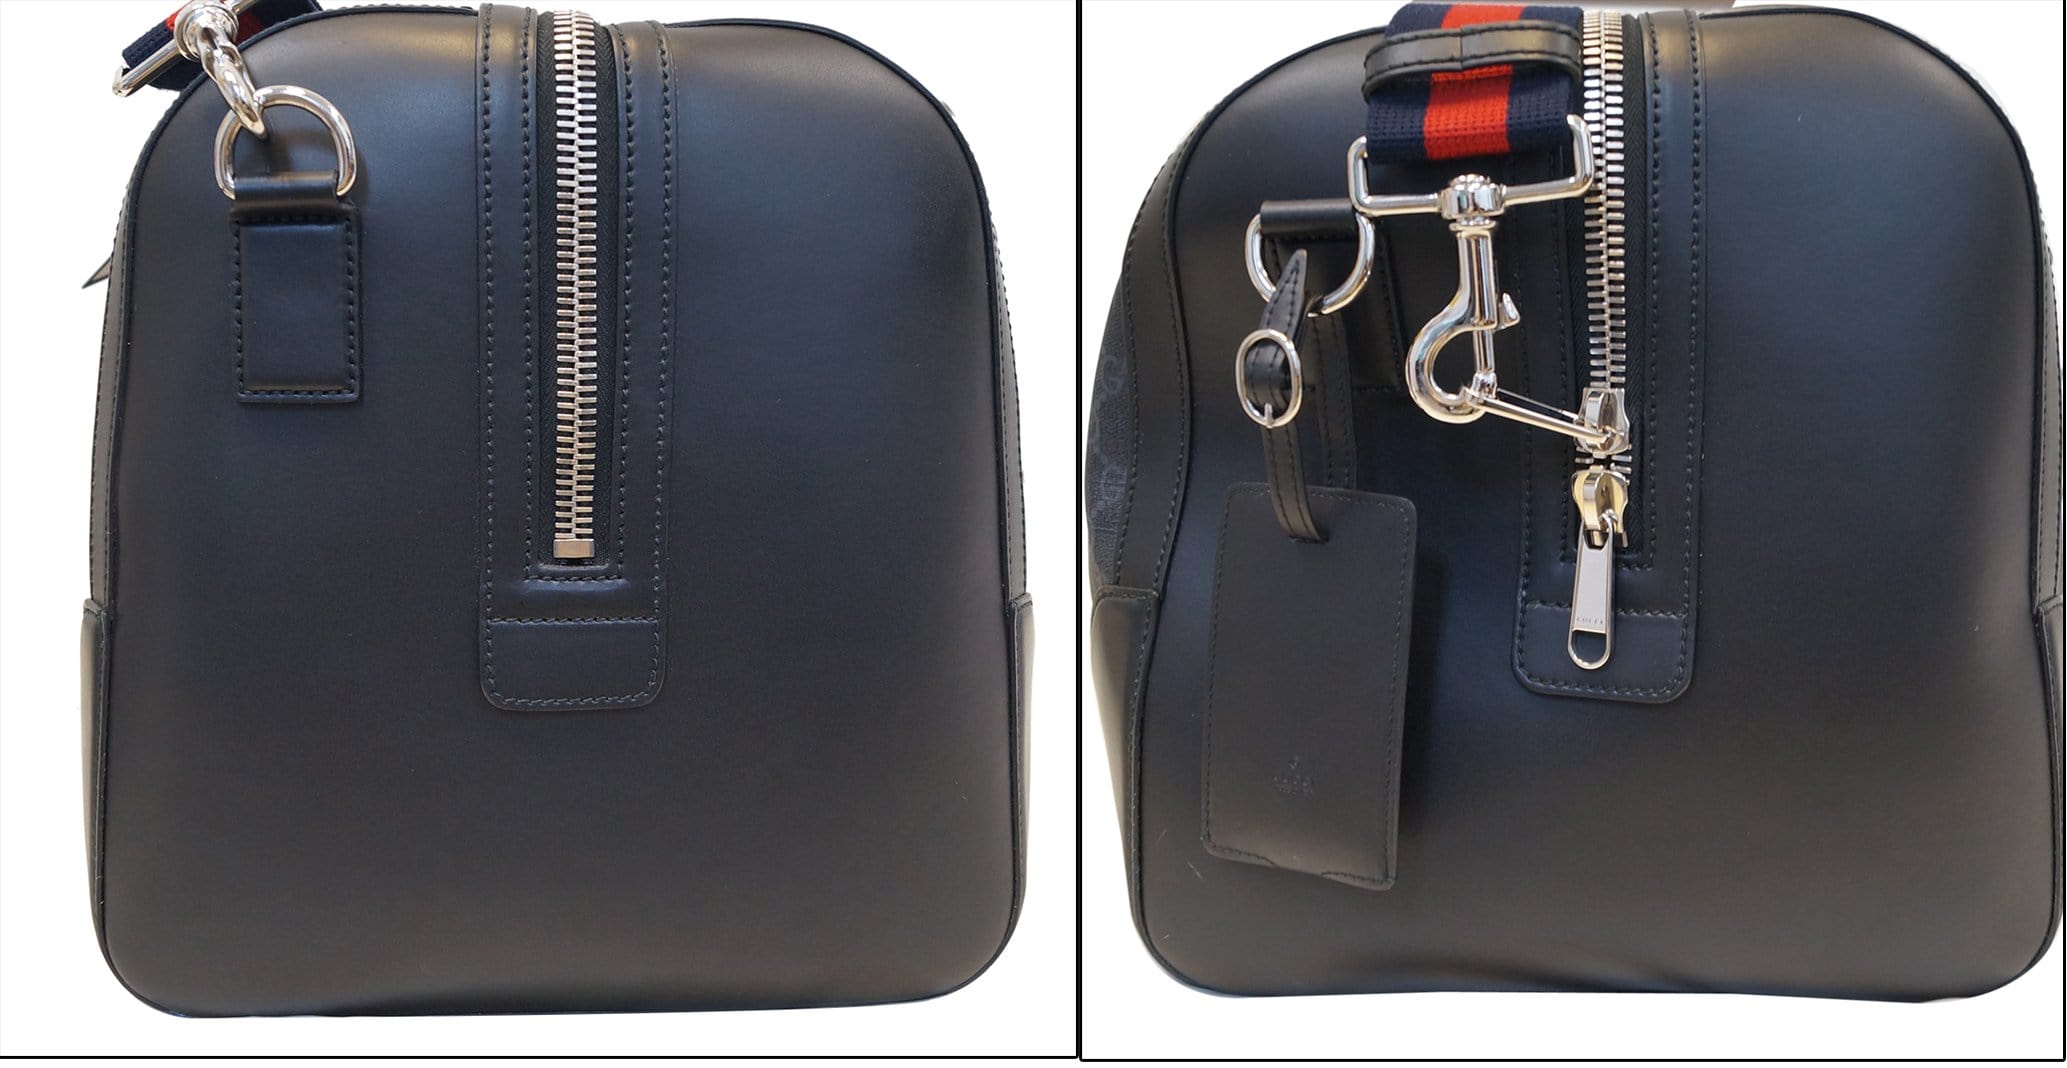 Cloth travel bag Supreme Black in Cloth - 29786524